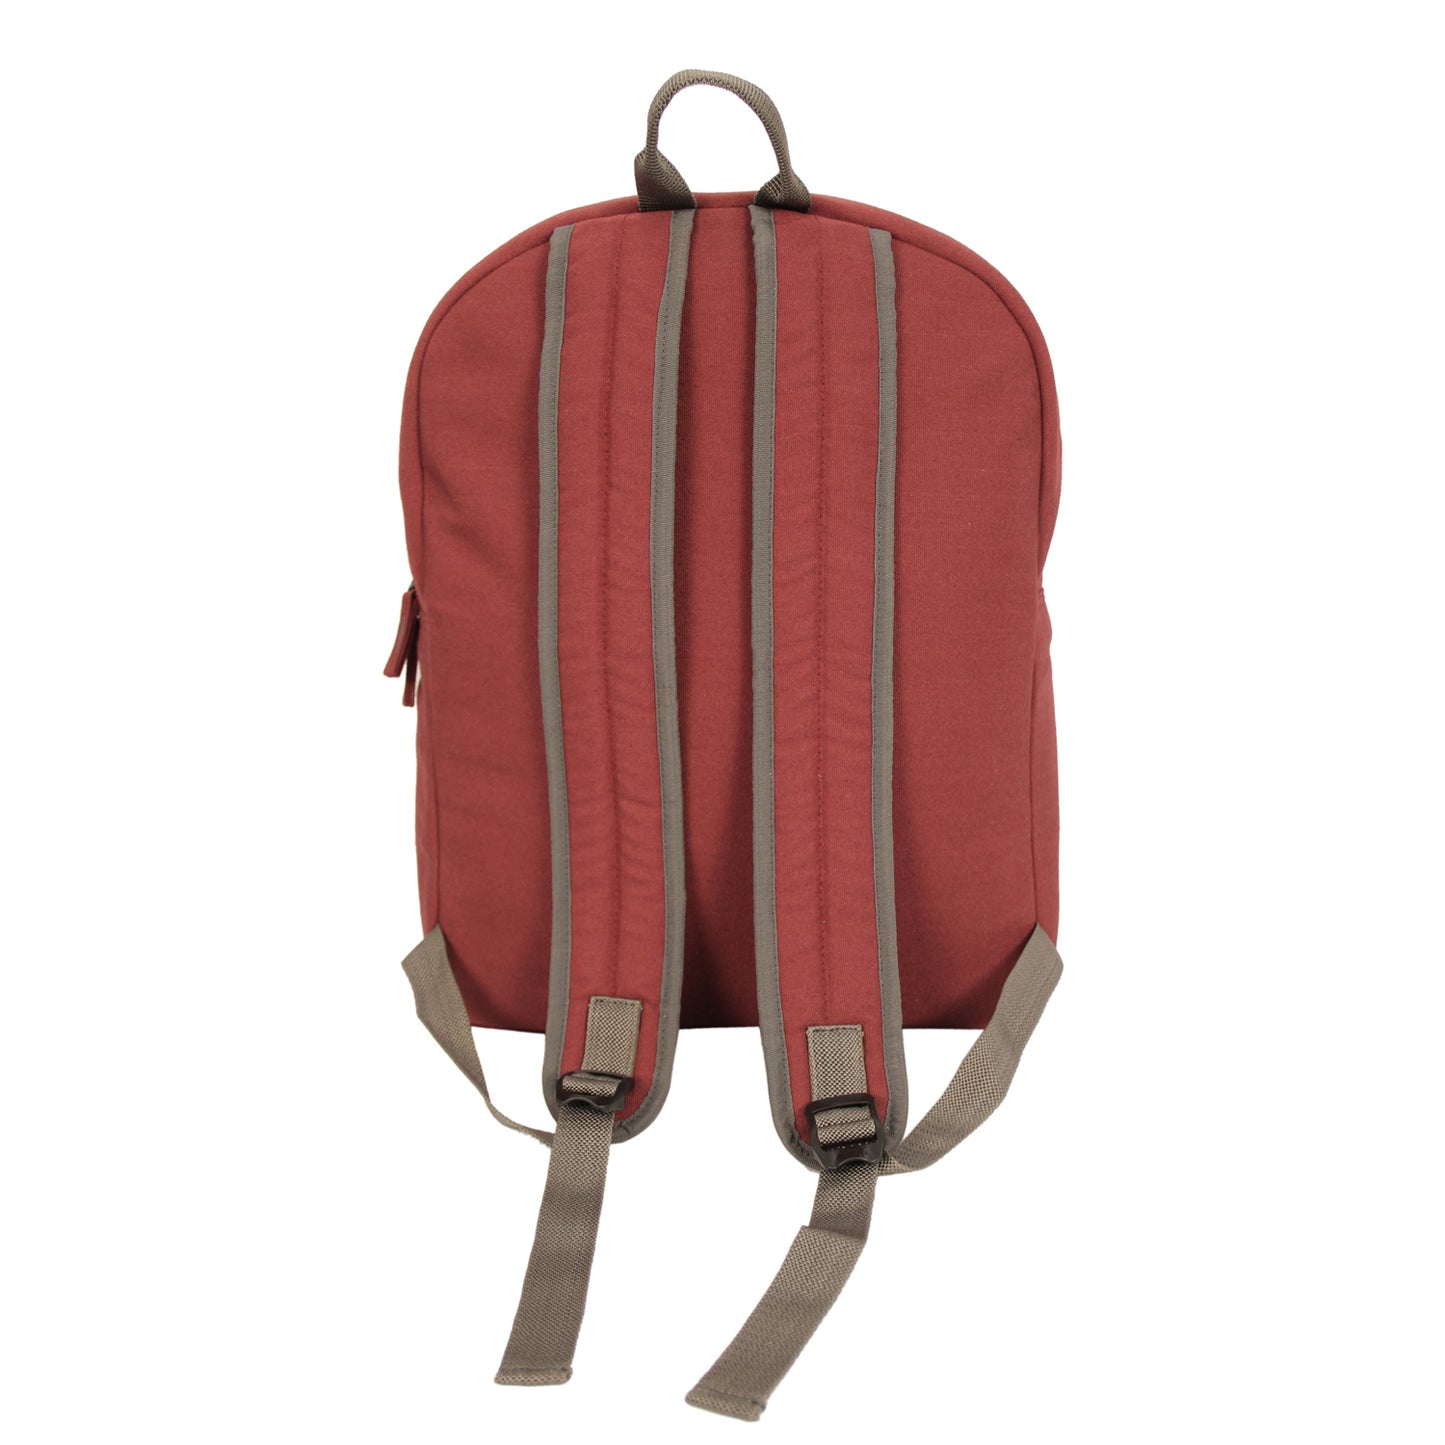 Maroon Canvas Backpack